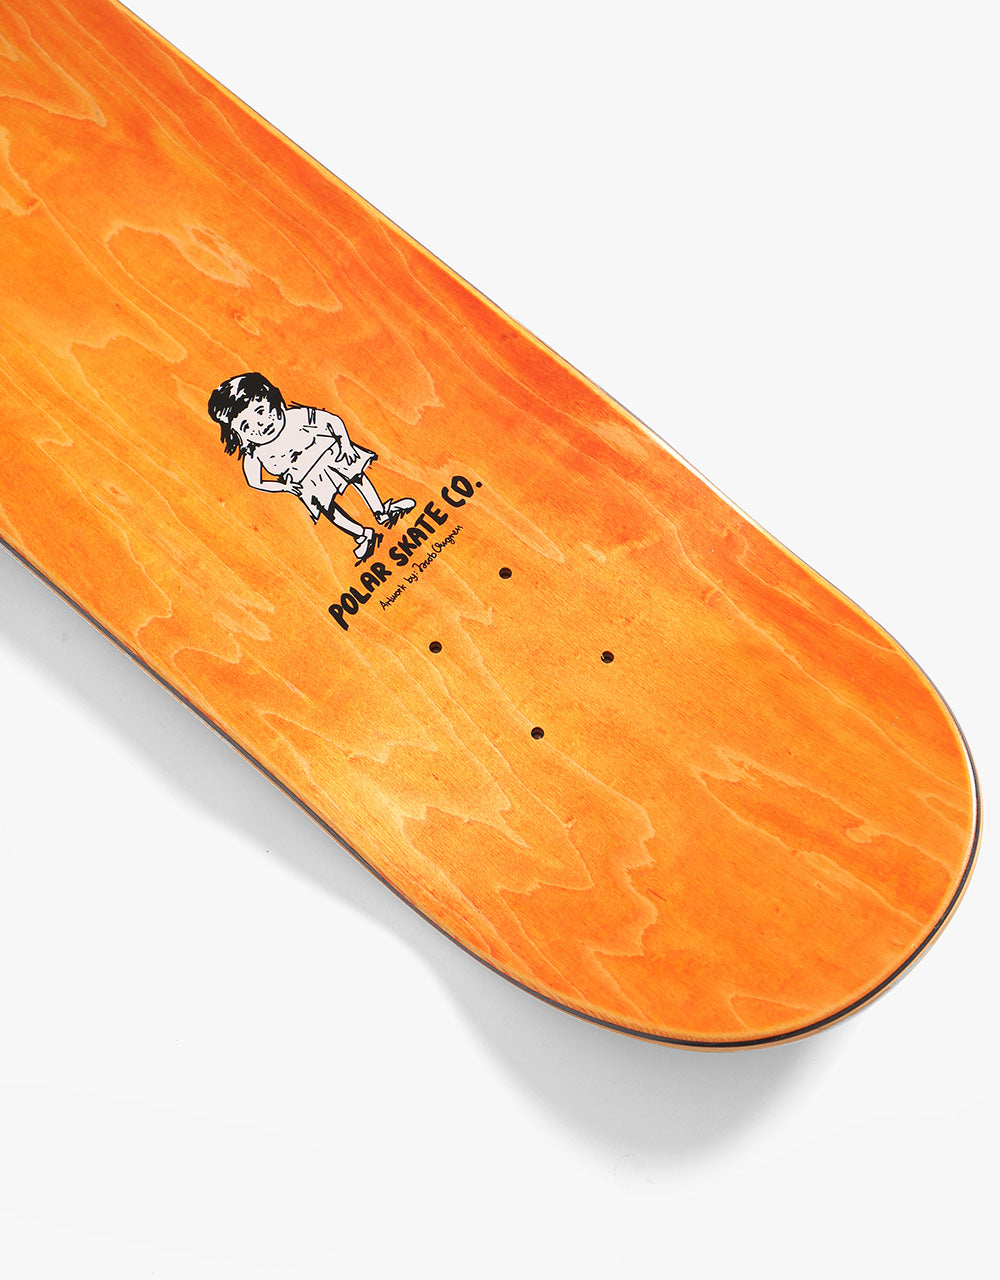 Polar Boserio Year 2020 Skateboard Deck - 8.25"